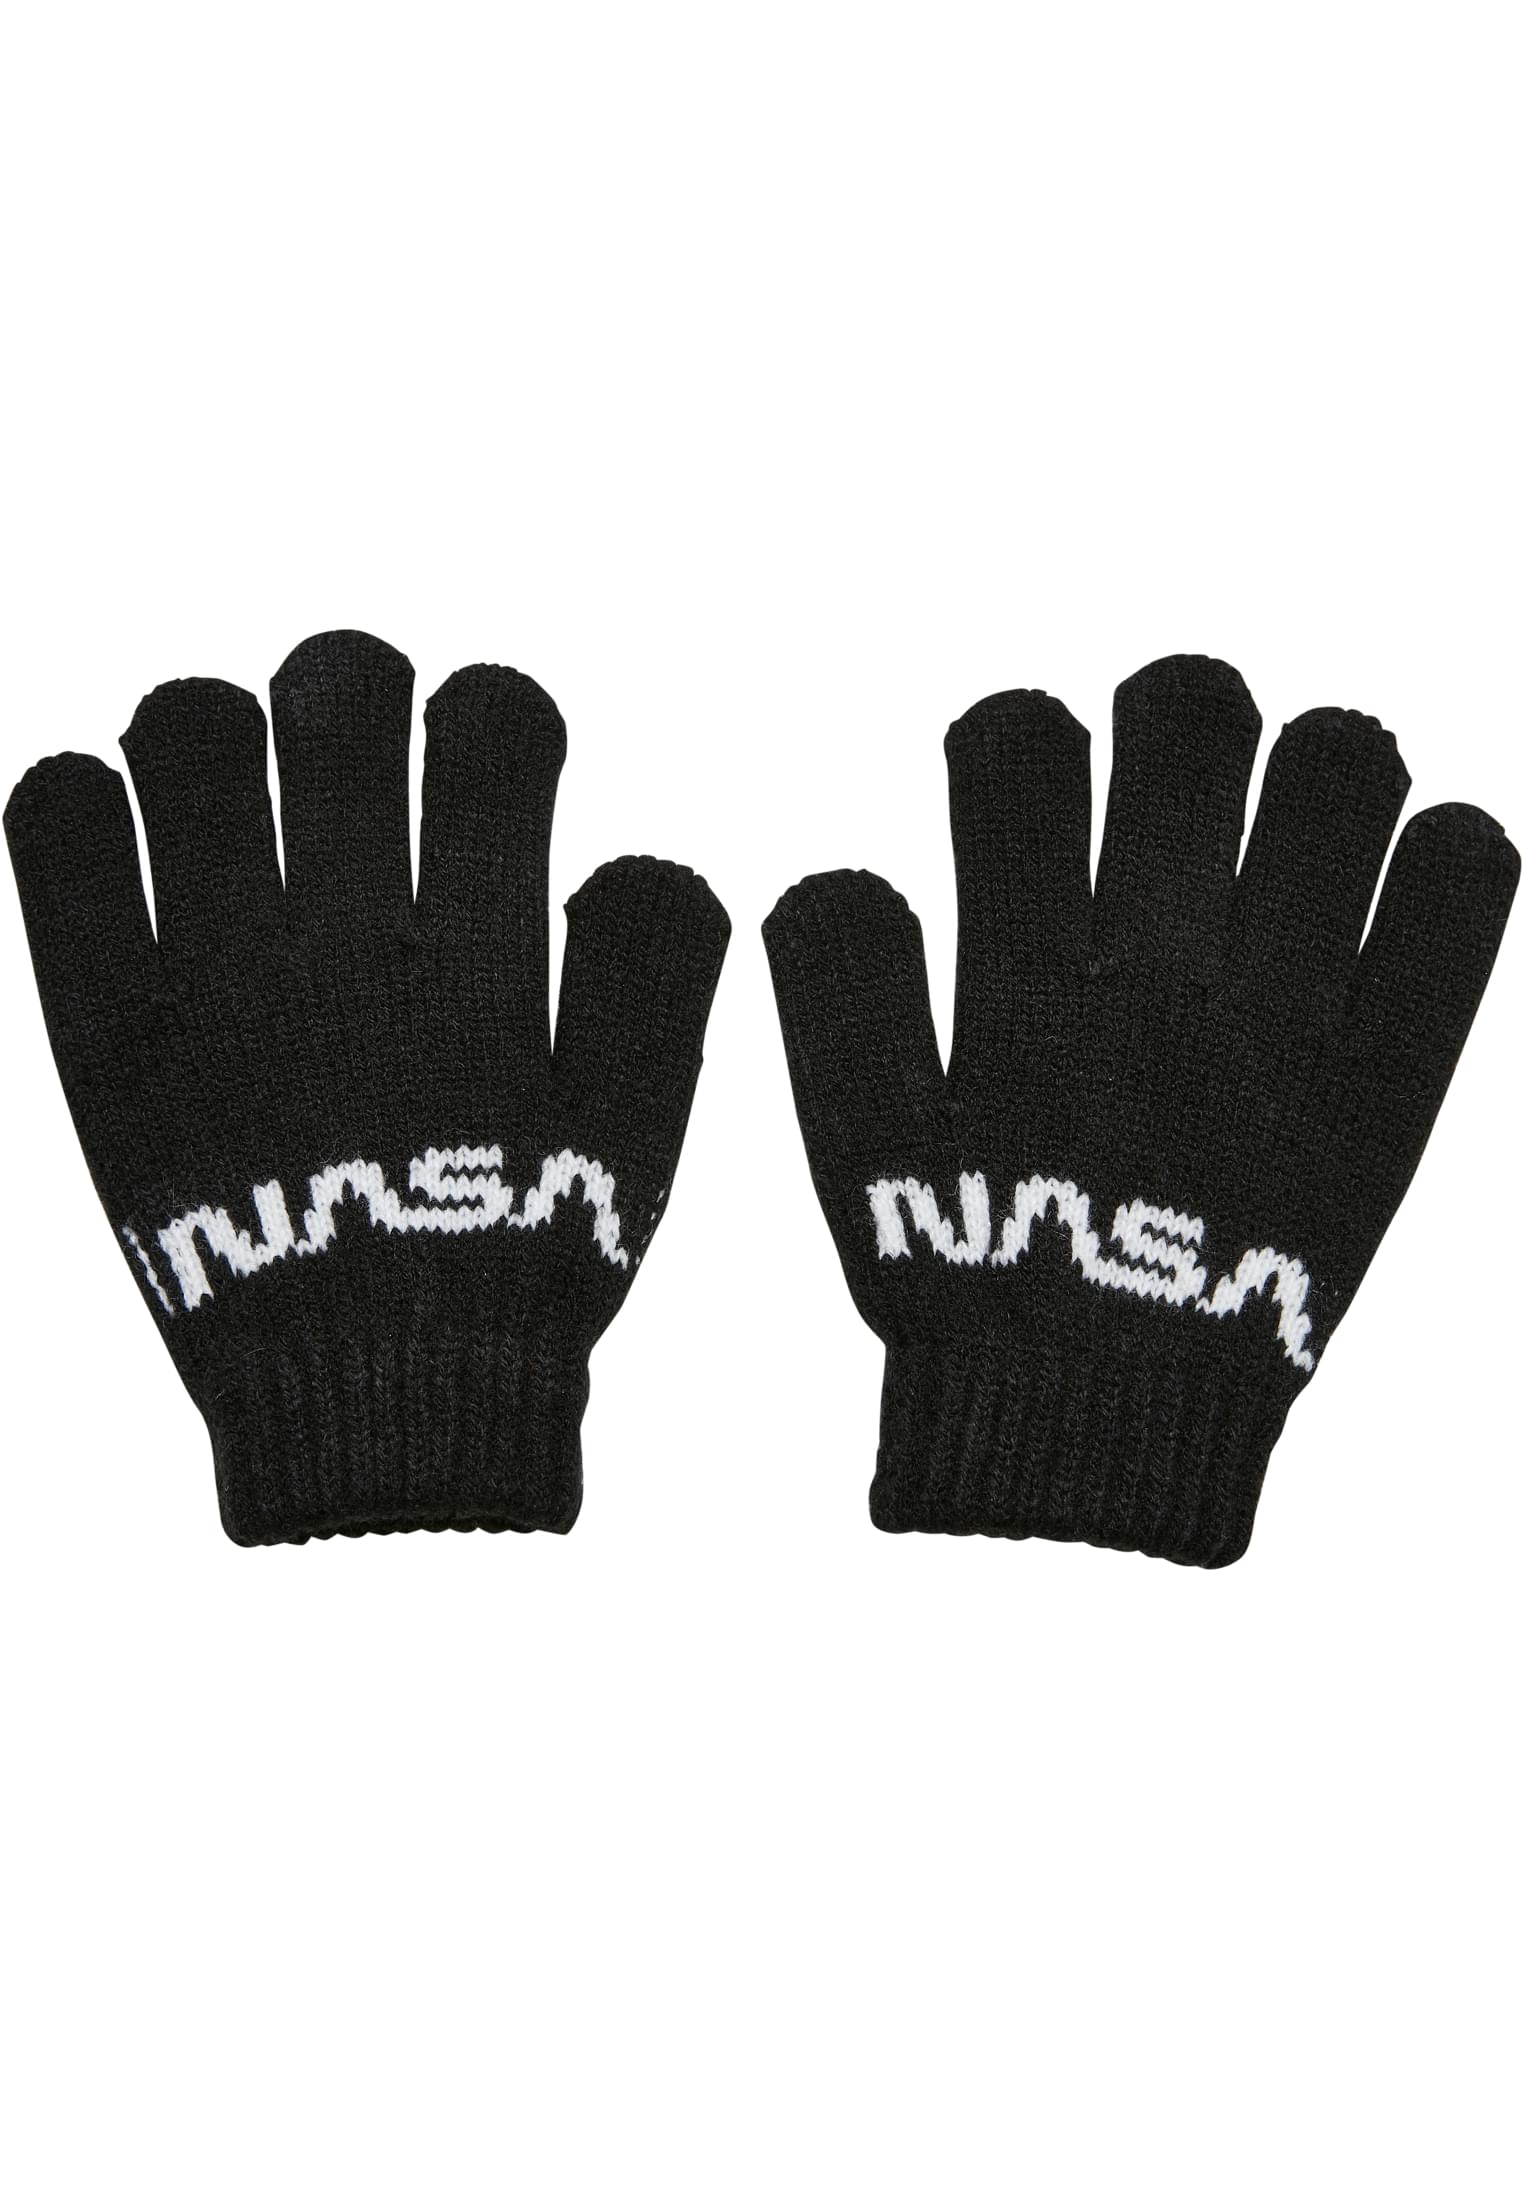 Children's knitted glove NASA black